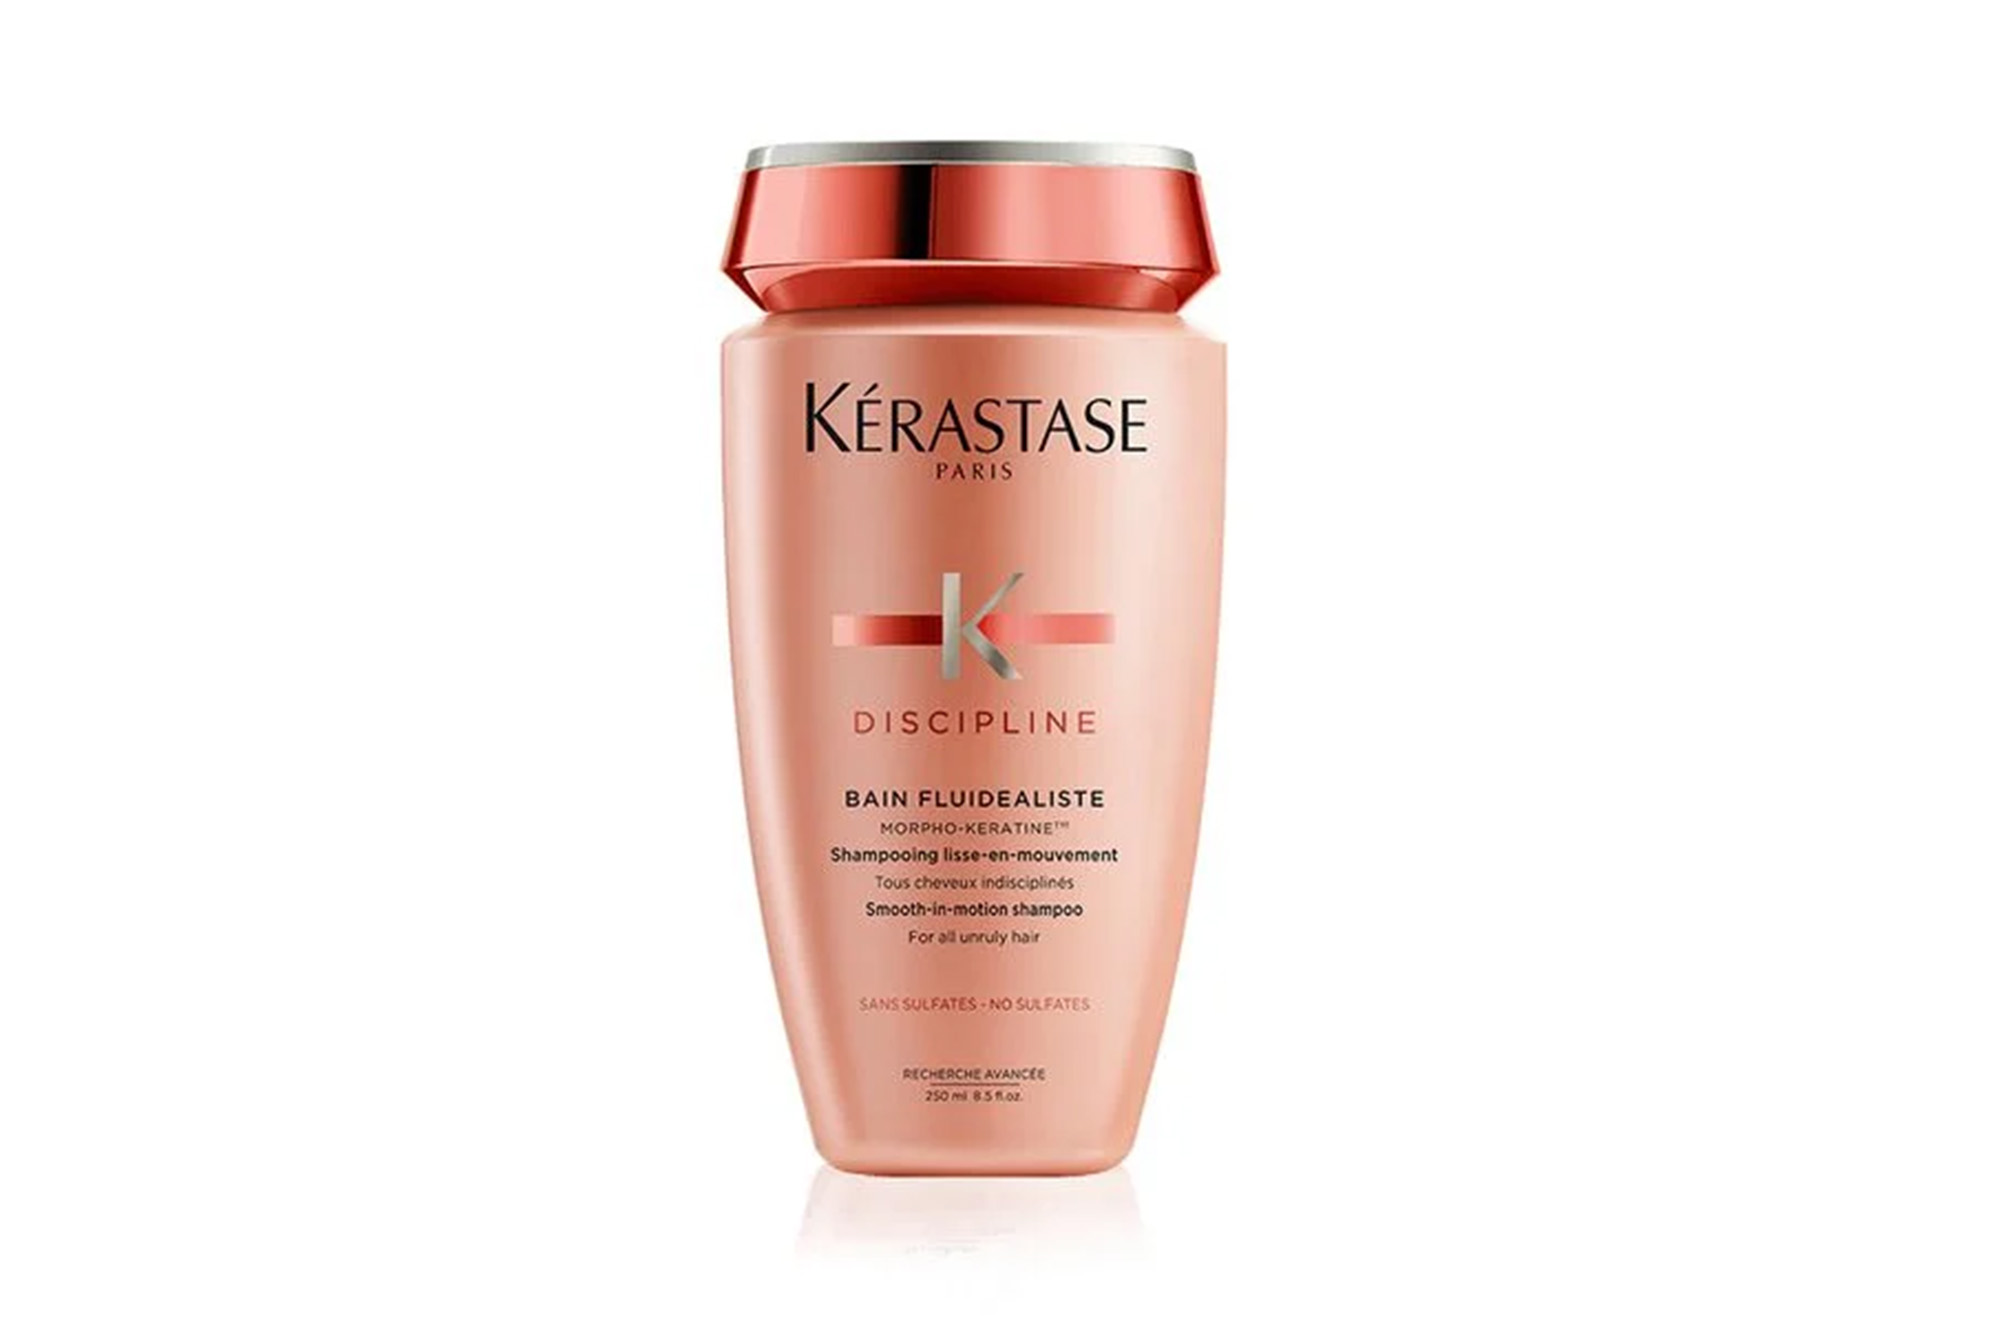 Kérastase sulfate-free shampoo